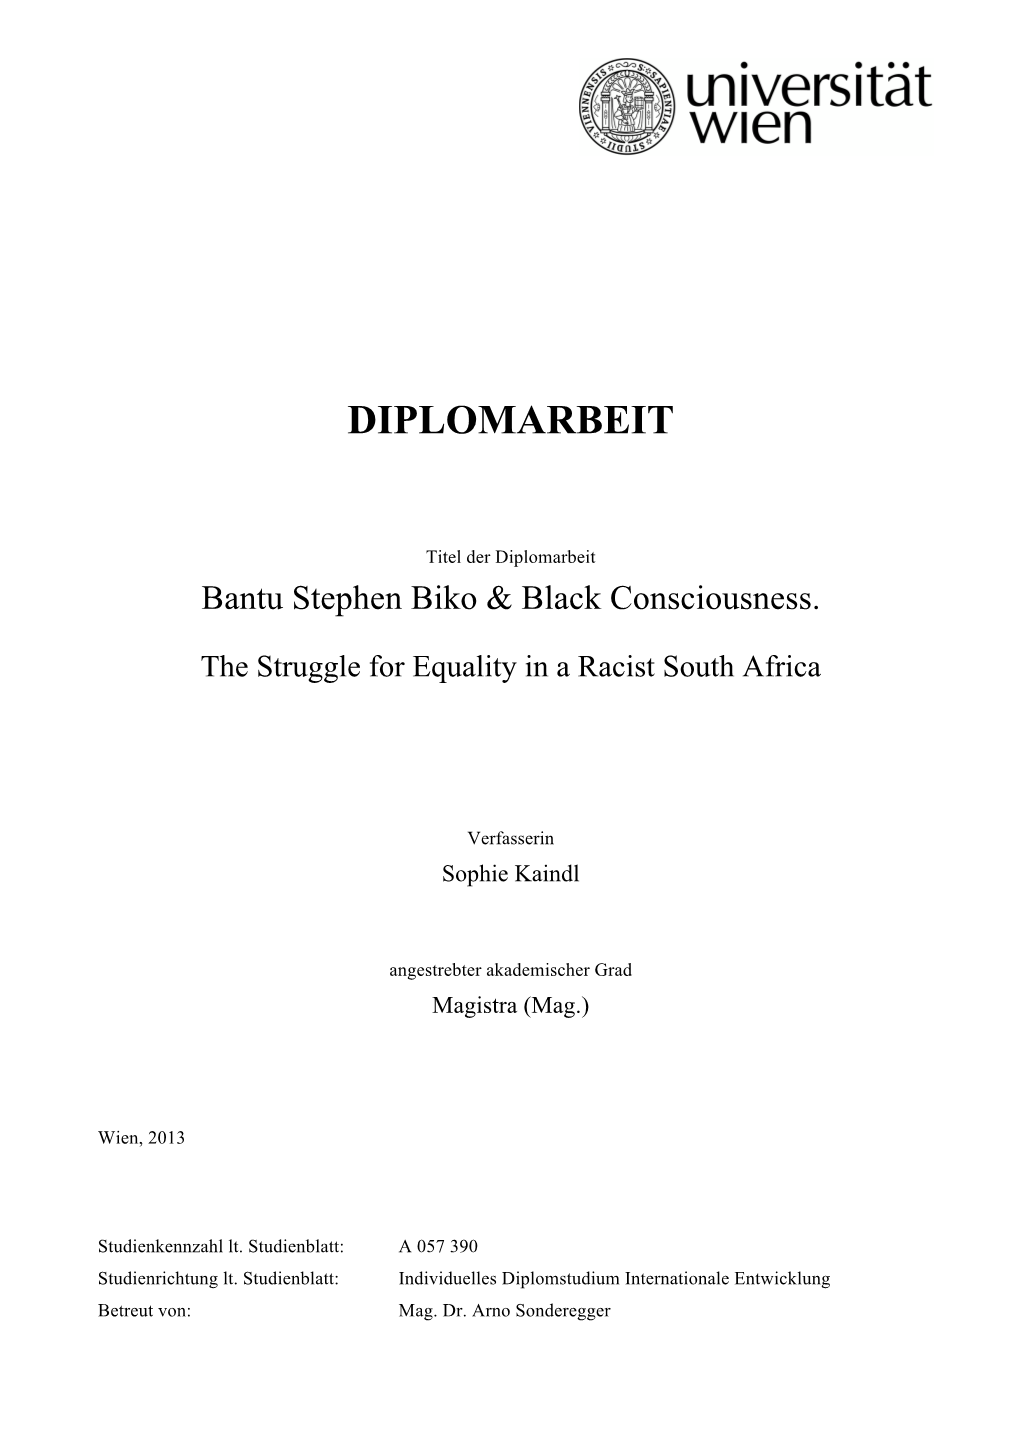 Bantu Stephen Biko & Black Consciousness